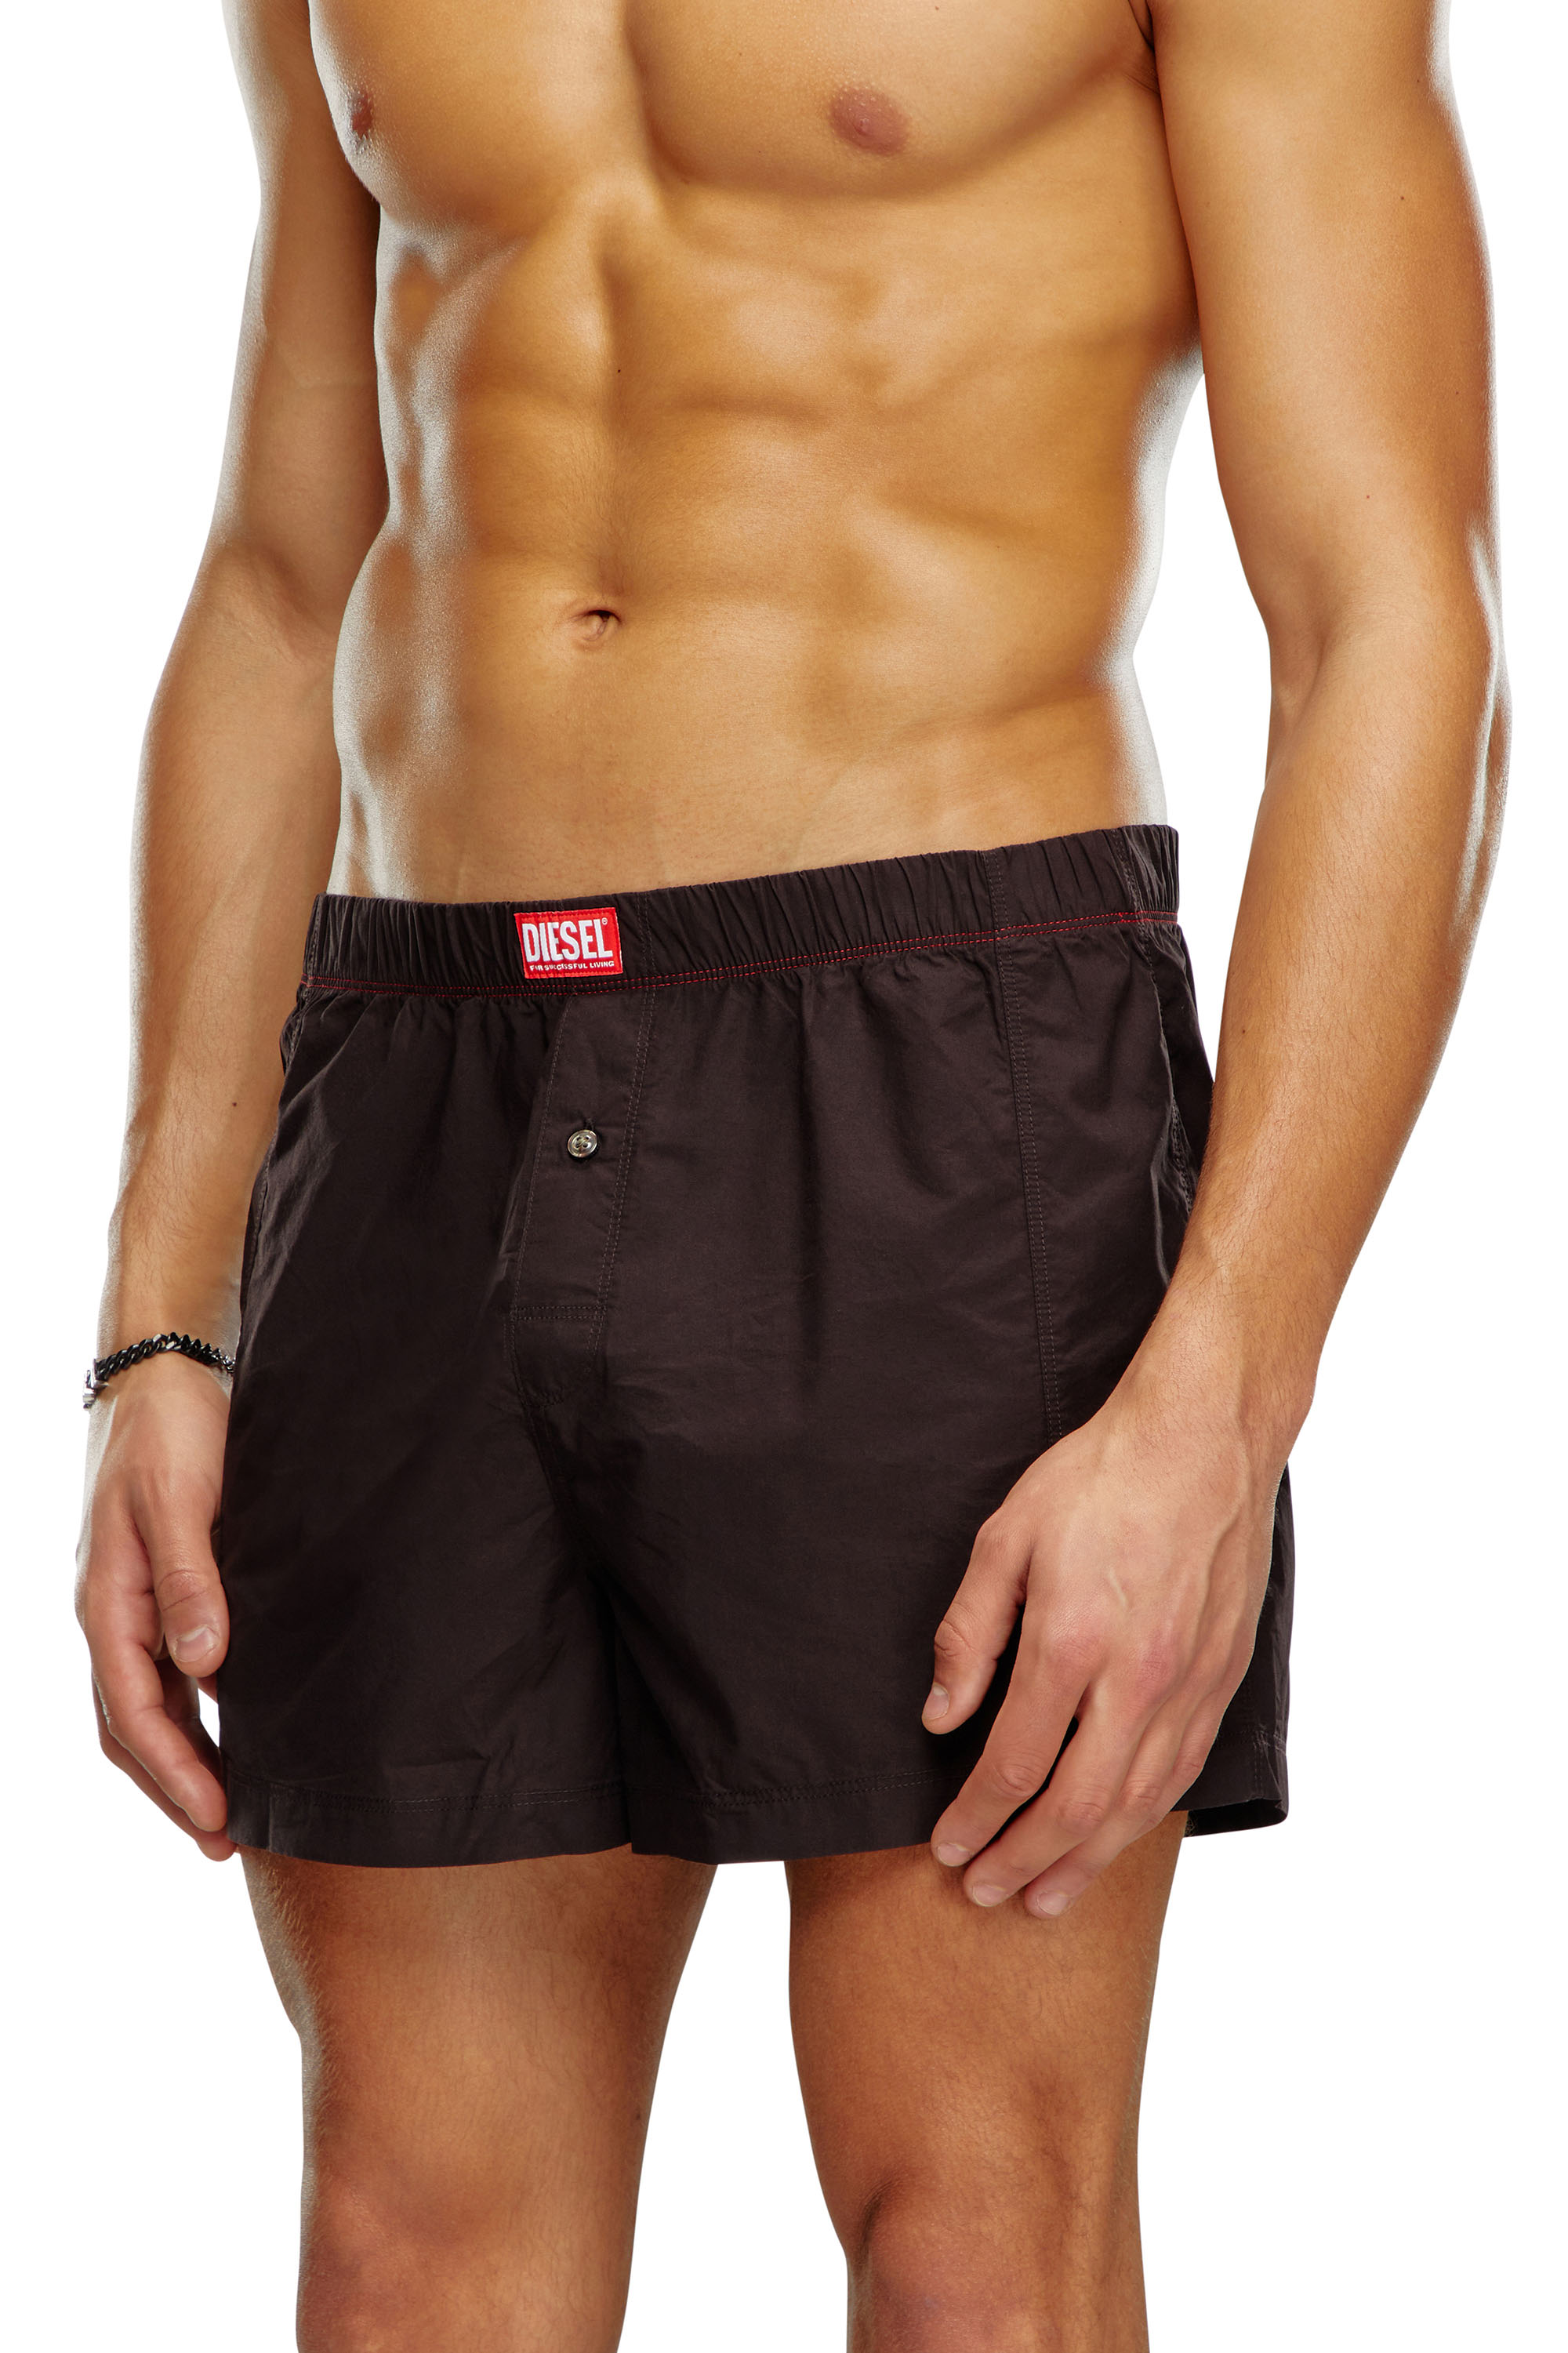 Diesel - UUBX-STARK, Unisex Nude cotton boxers in Brown - Image 2